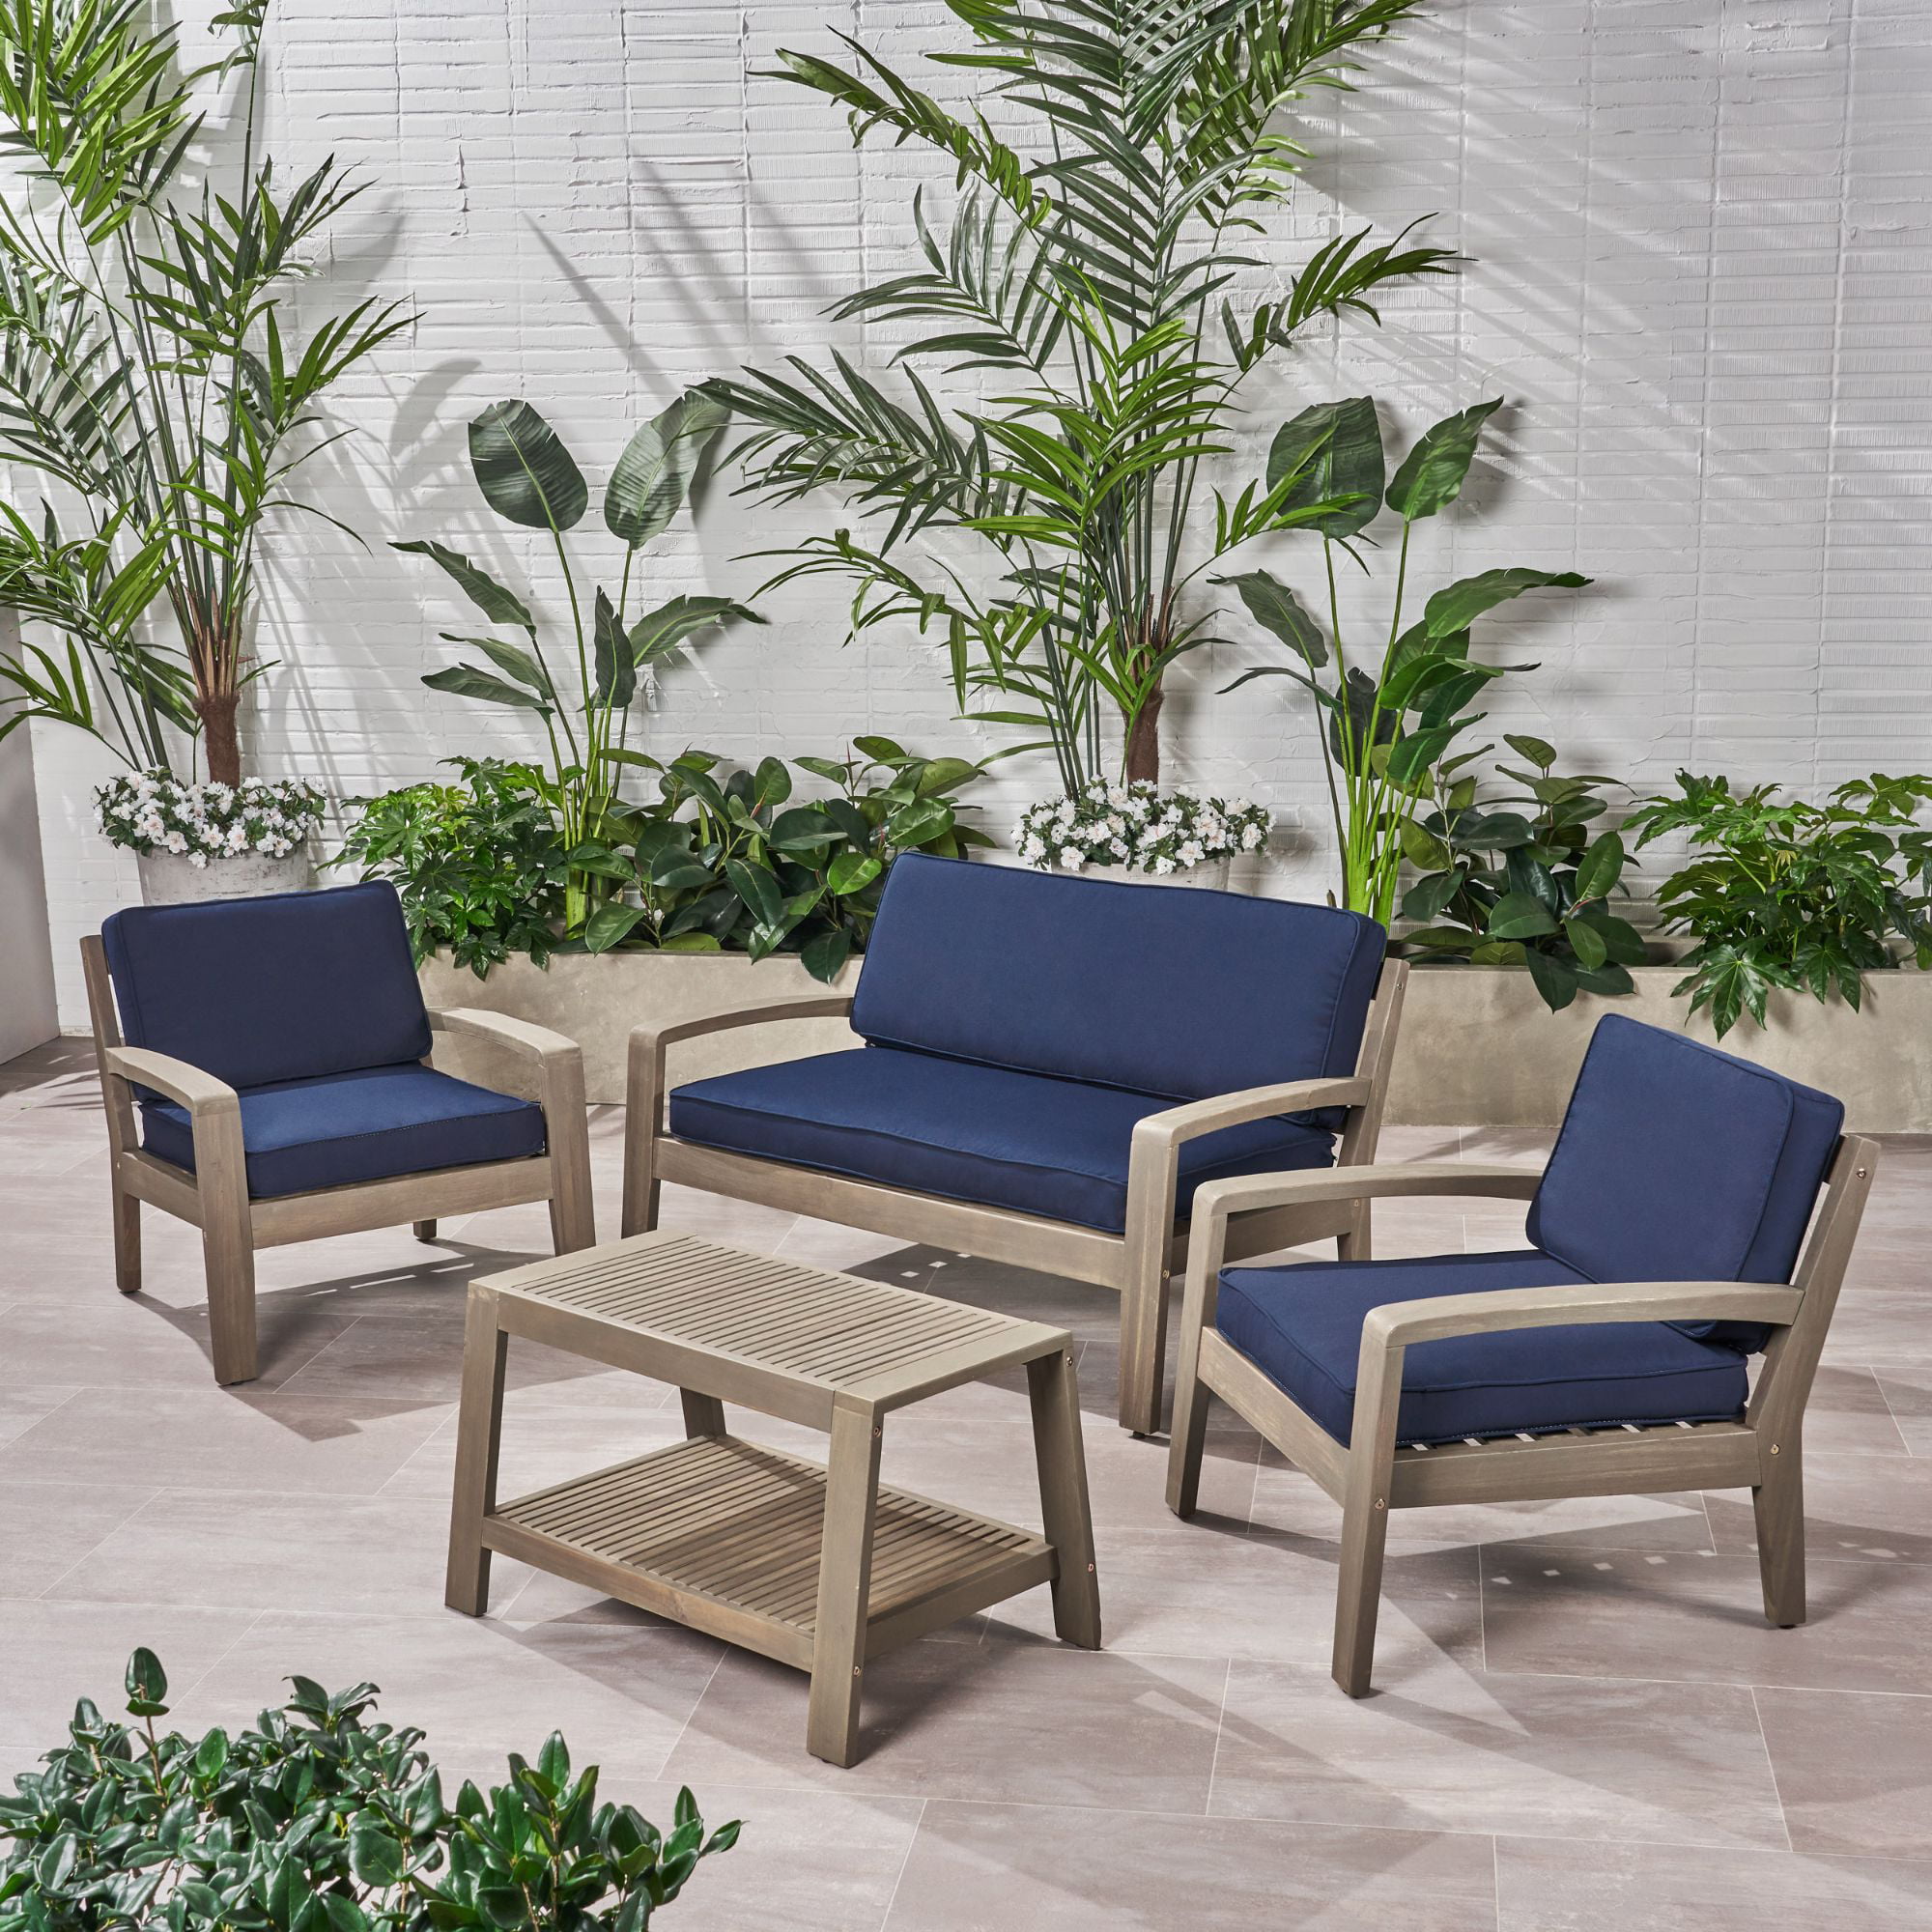 4-piece gray wood finish outdoor furniture patio conversation set